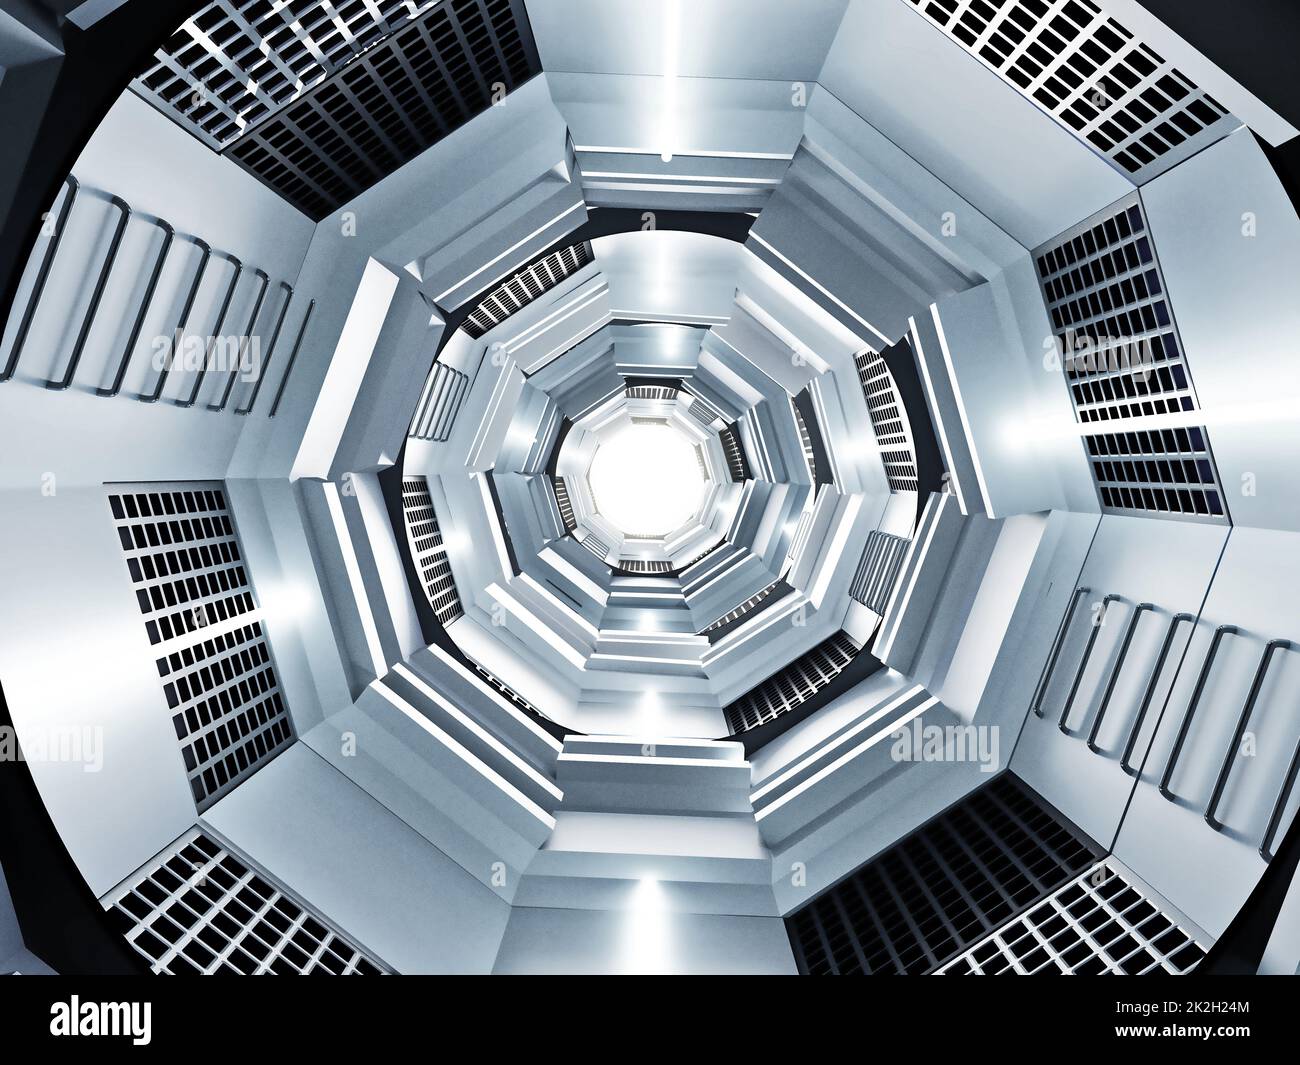 https://c8.alamy.com/comp/2K2H24M/futuristic-tunnel-or-spaceship-interior-3d-illustration-2K2H24M.jpg